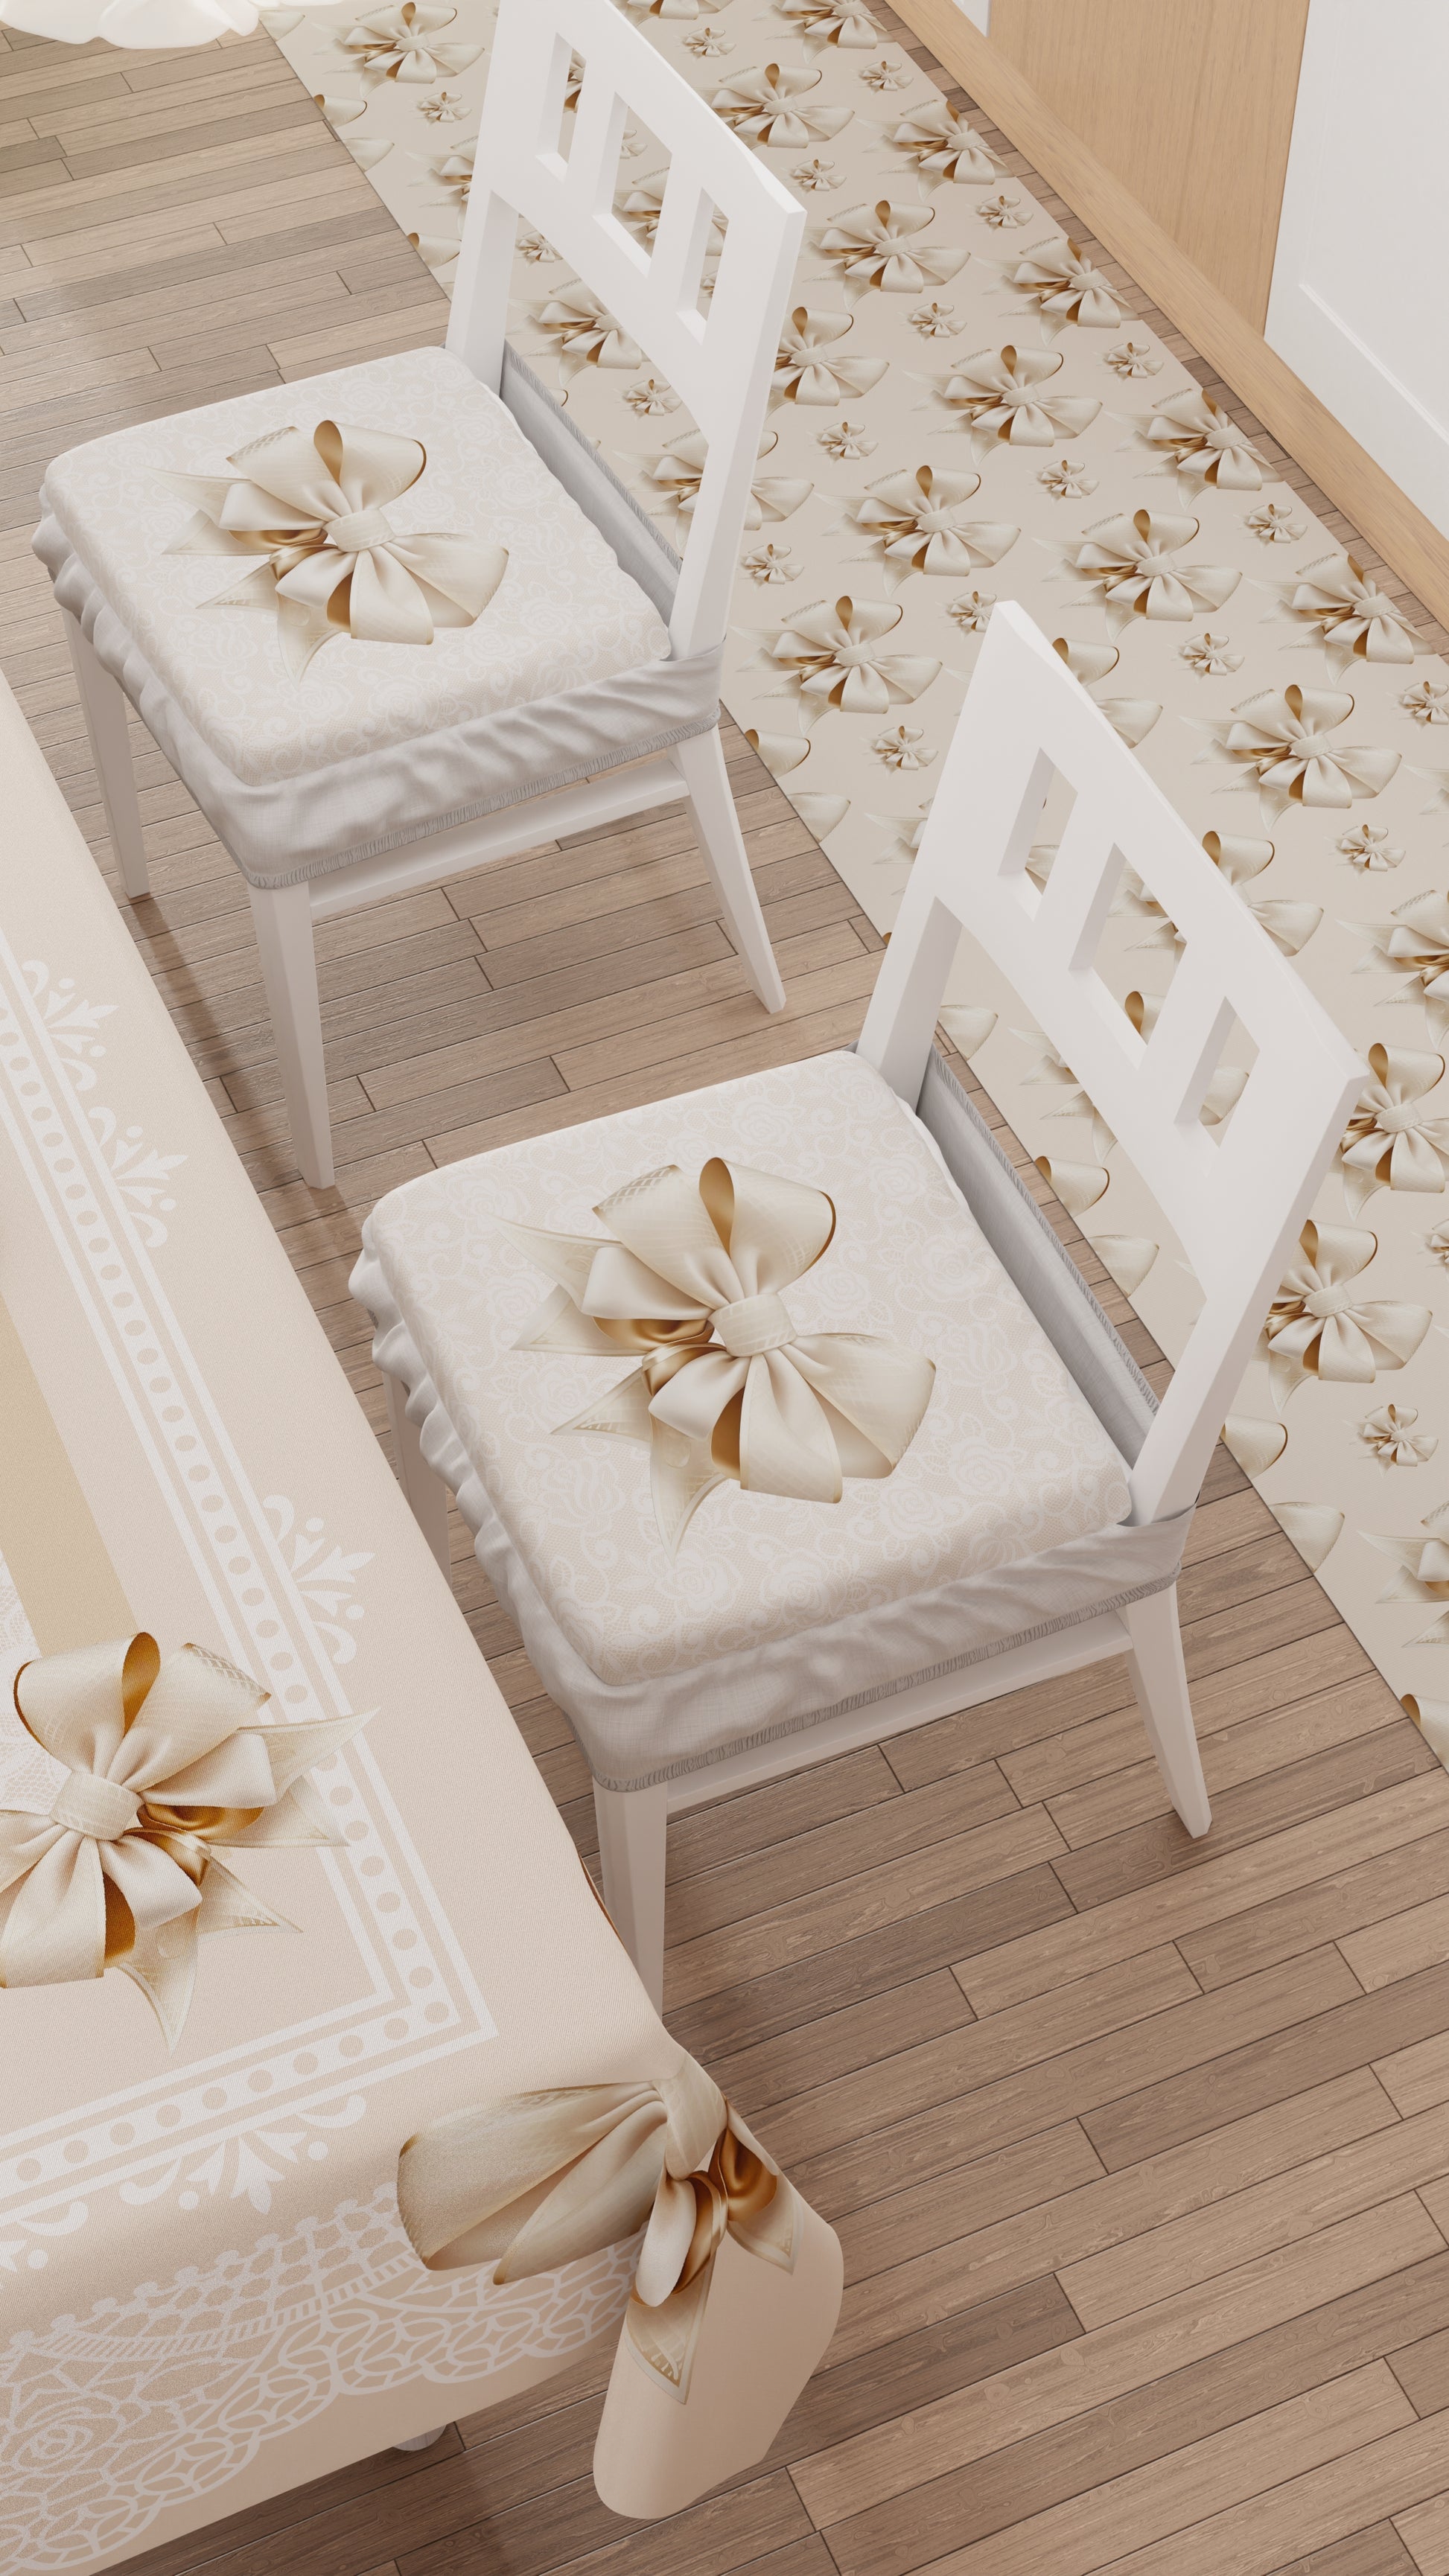 Set 2 cuscini per sedia pois beige in cotone stile classico